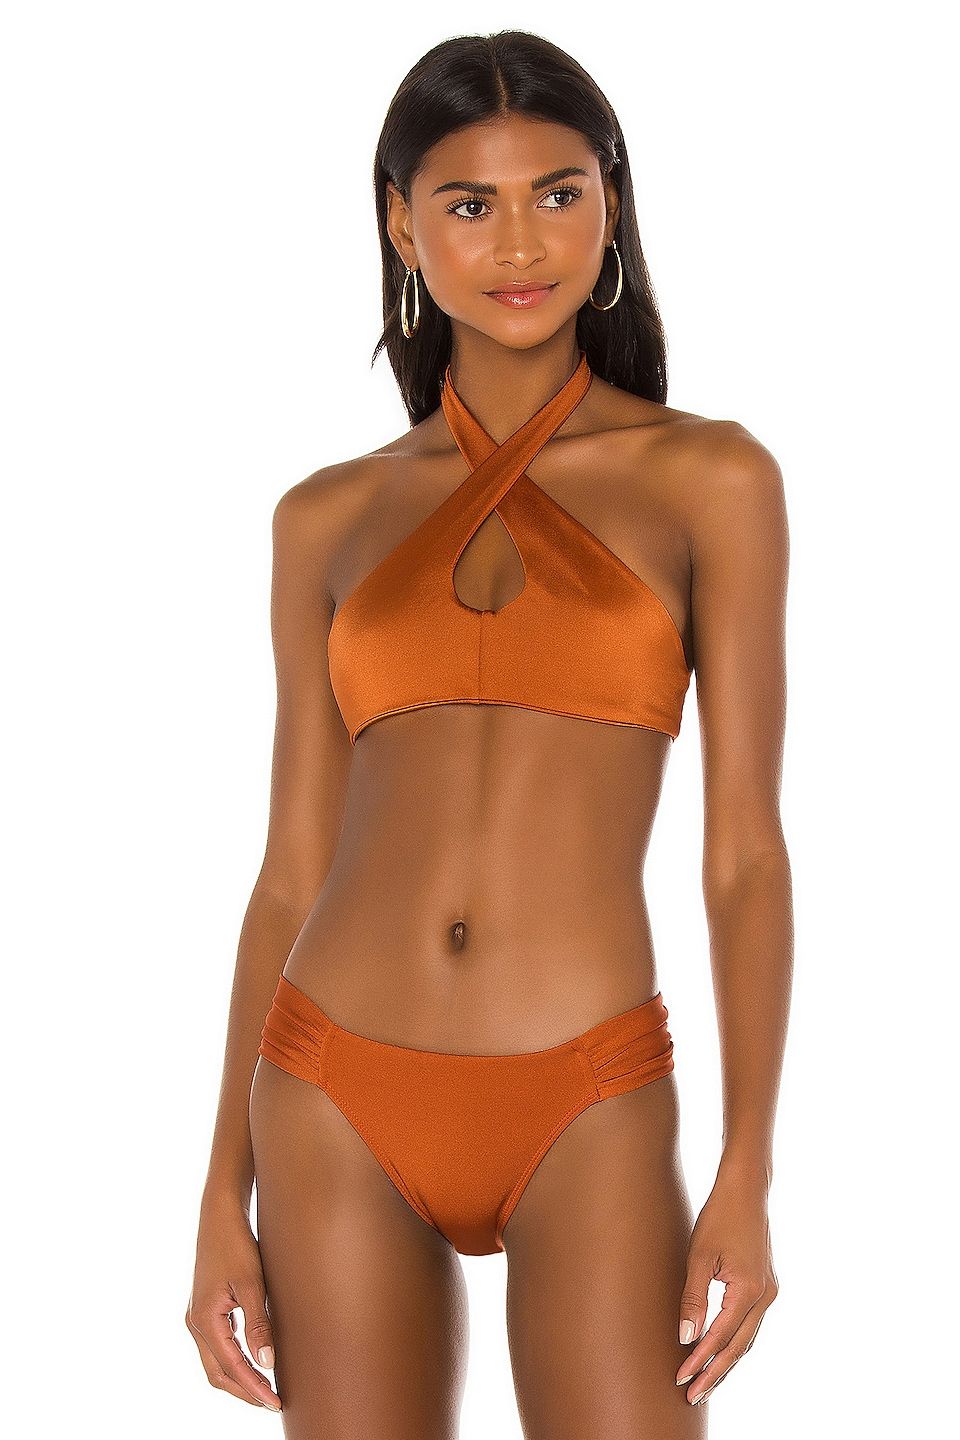 Buy Bikini For Flat Chested online